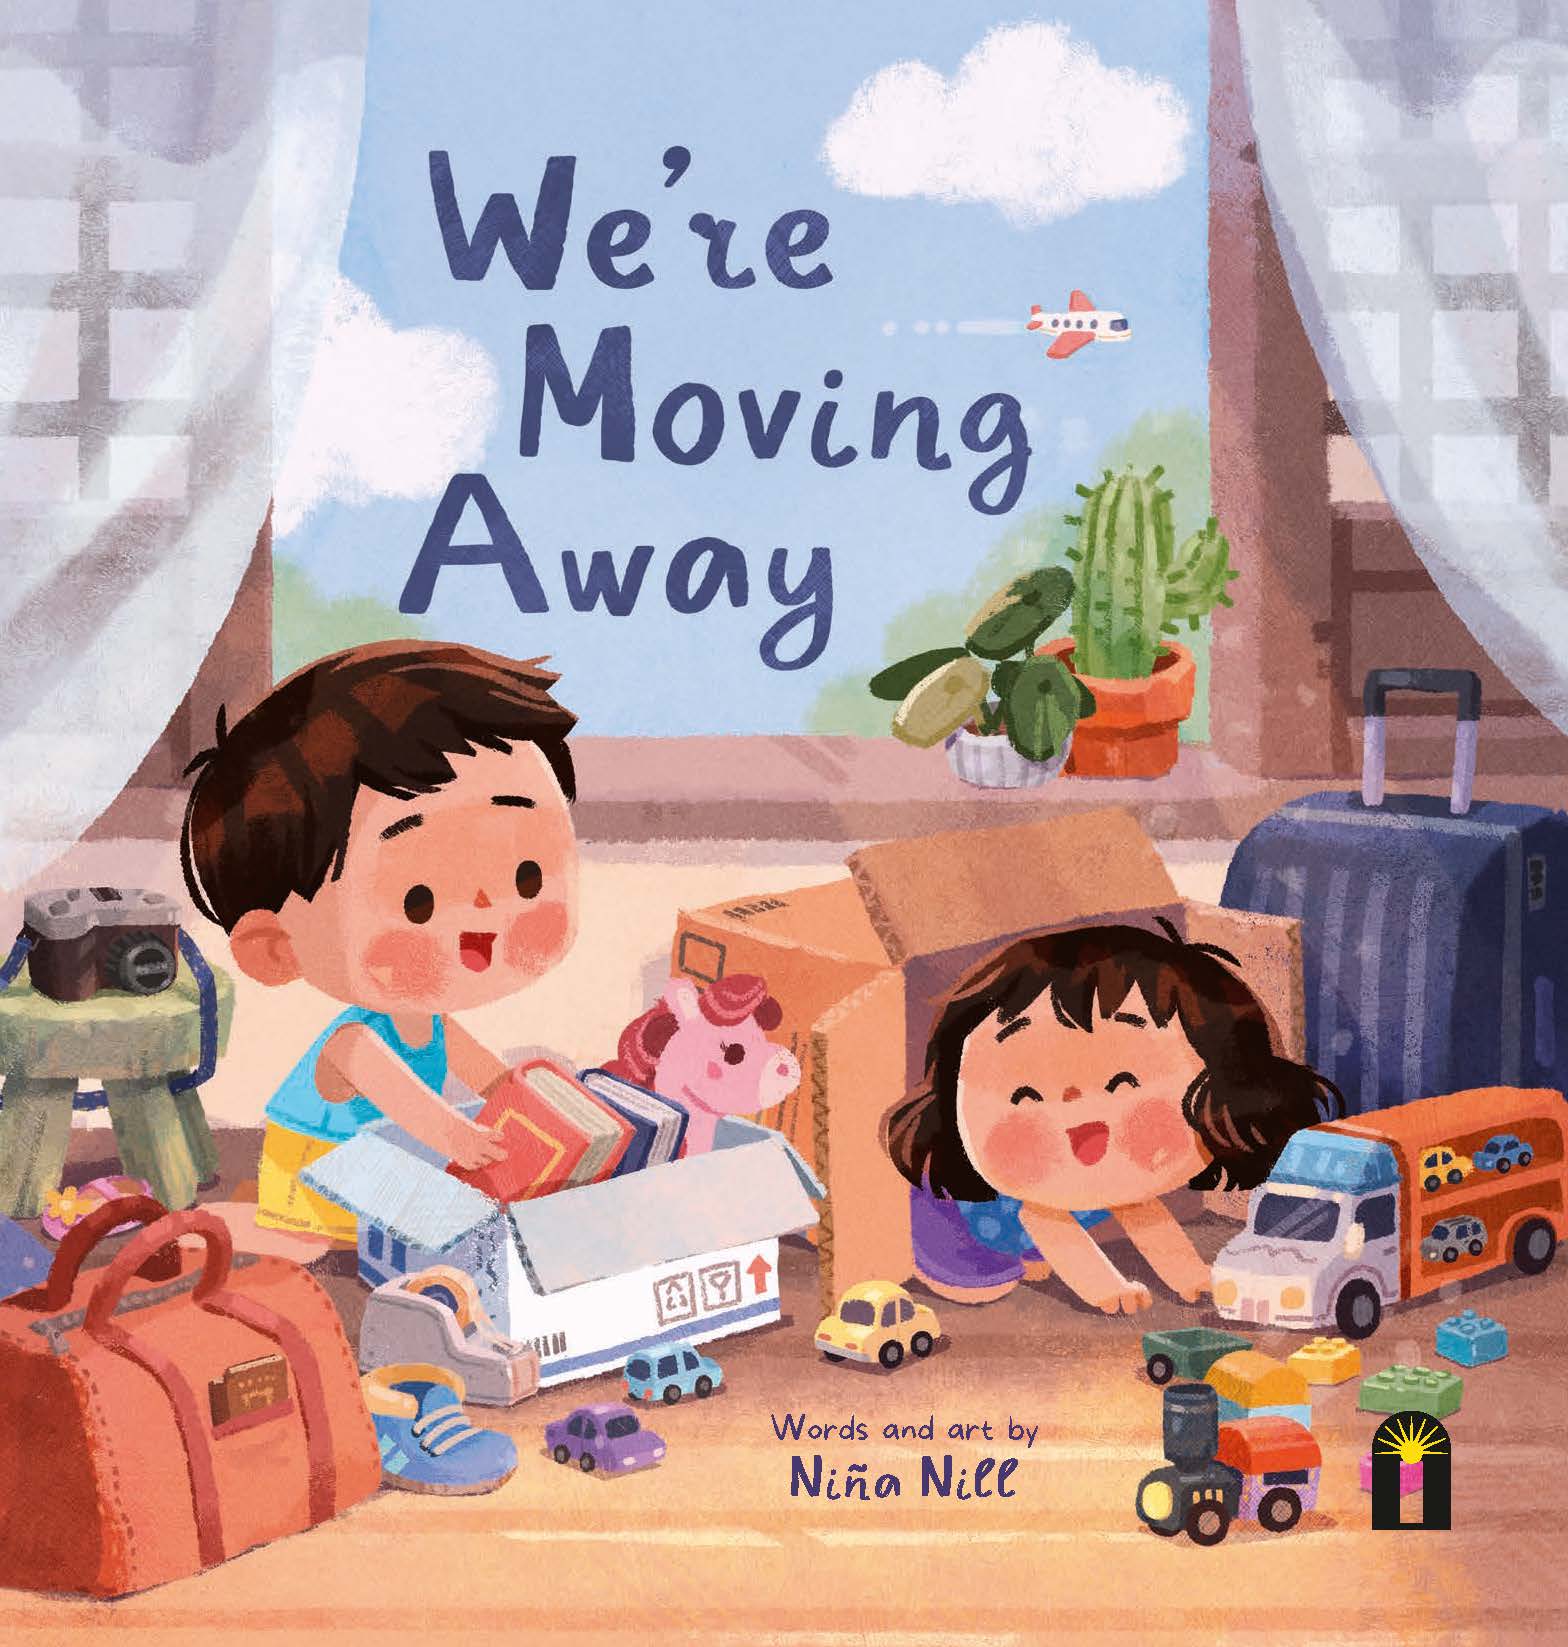 We’re Moving Away